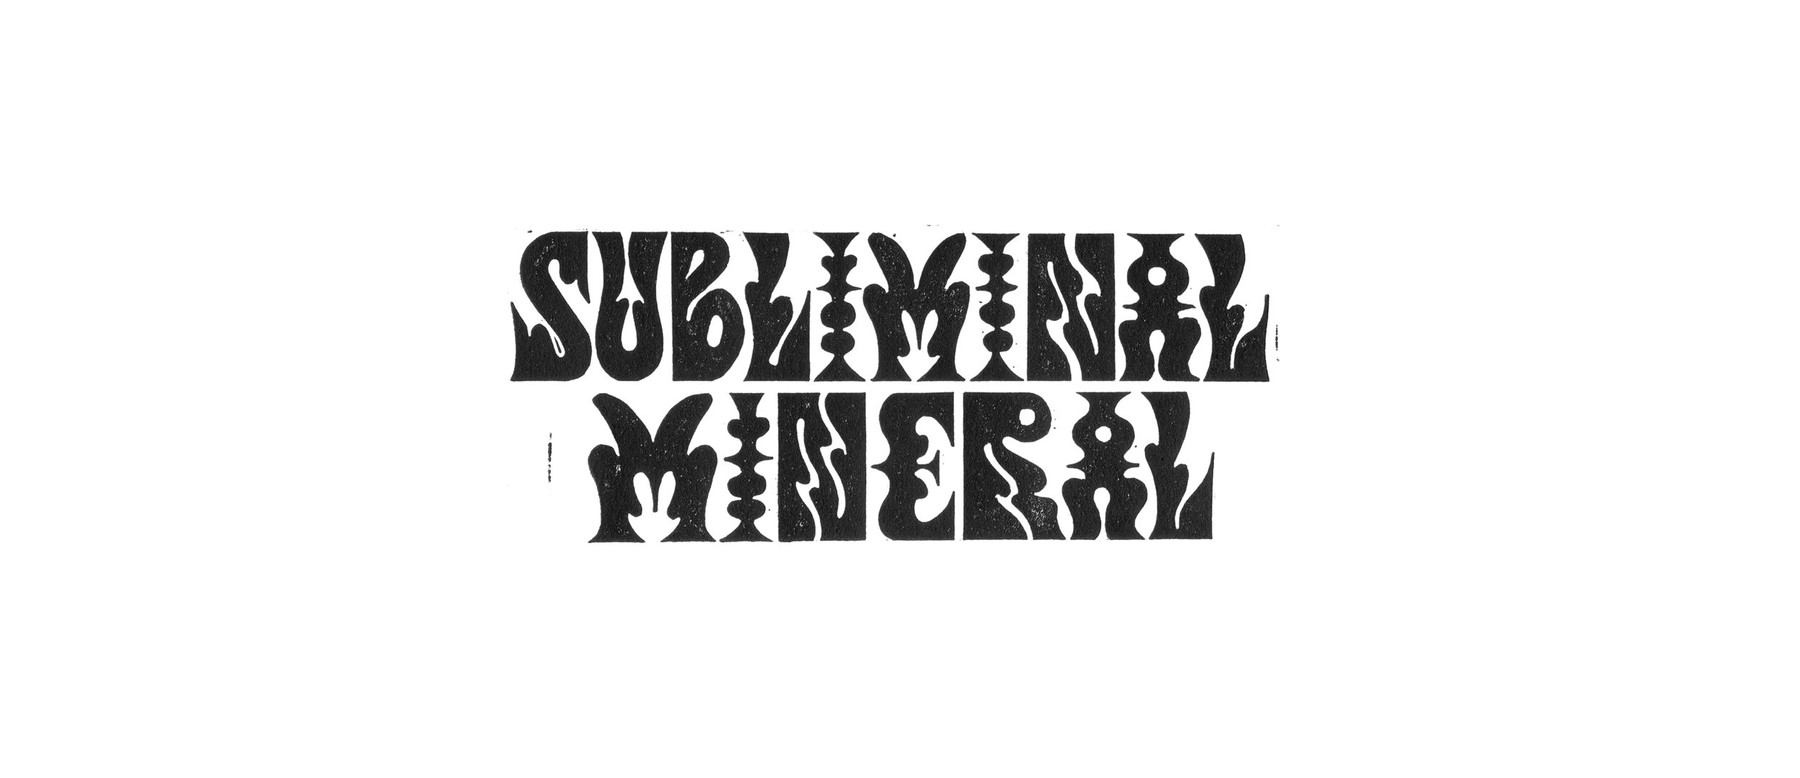 subliminal-mineral-clean-web.jpg?format=2500w